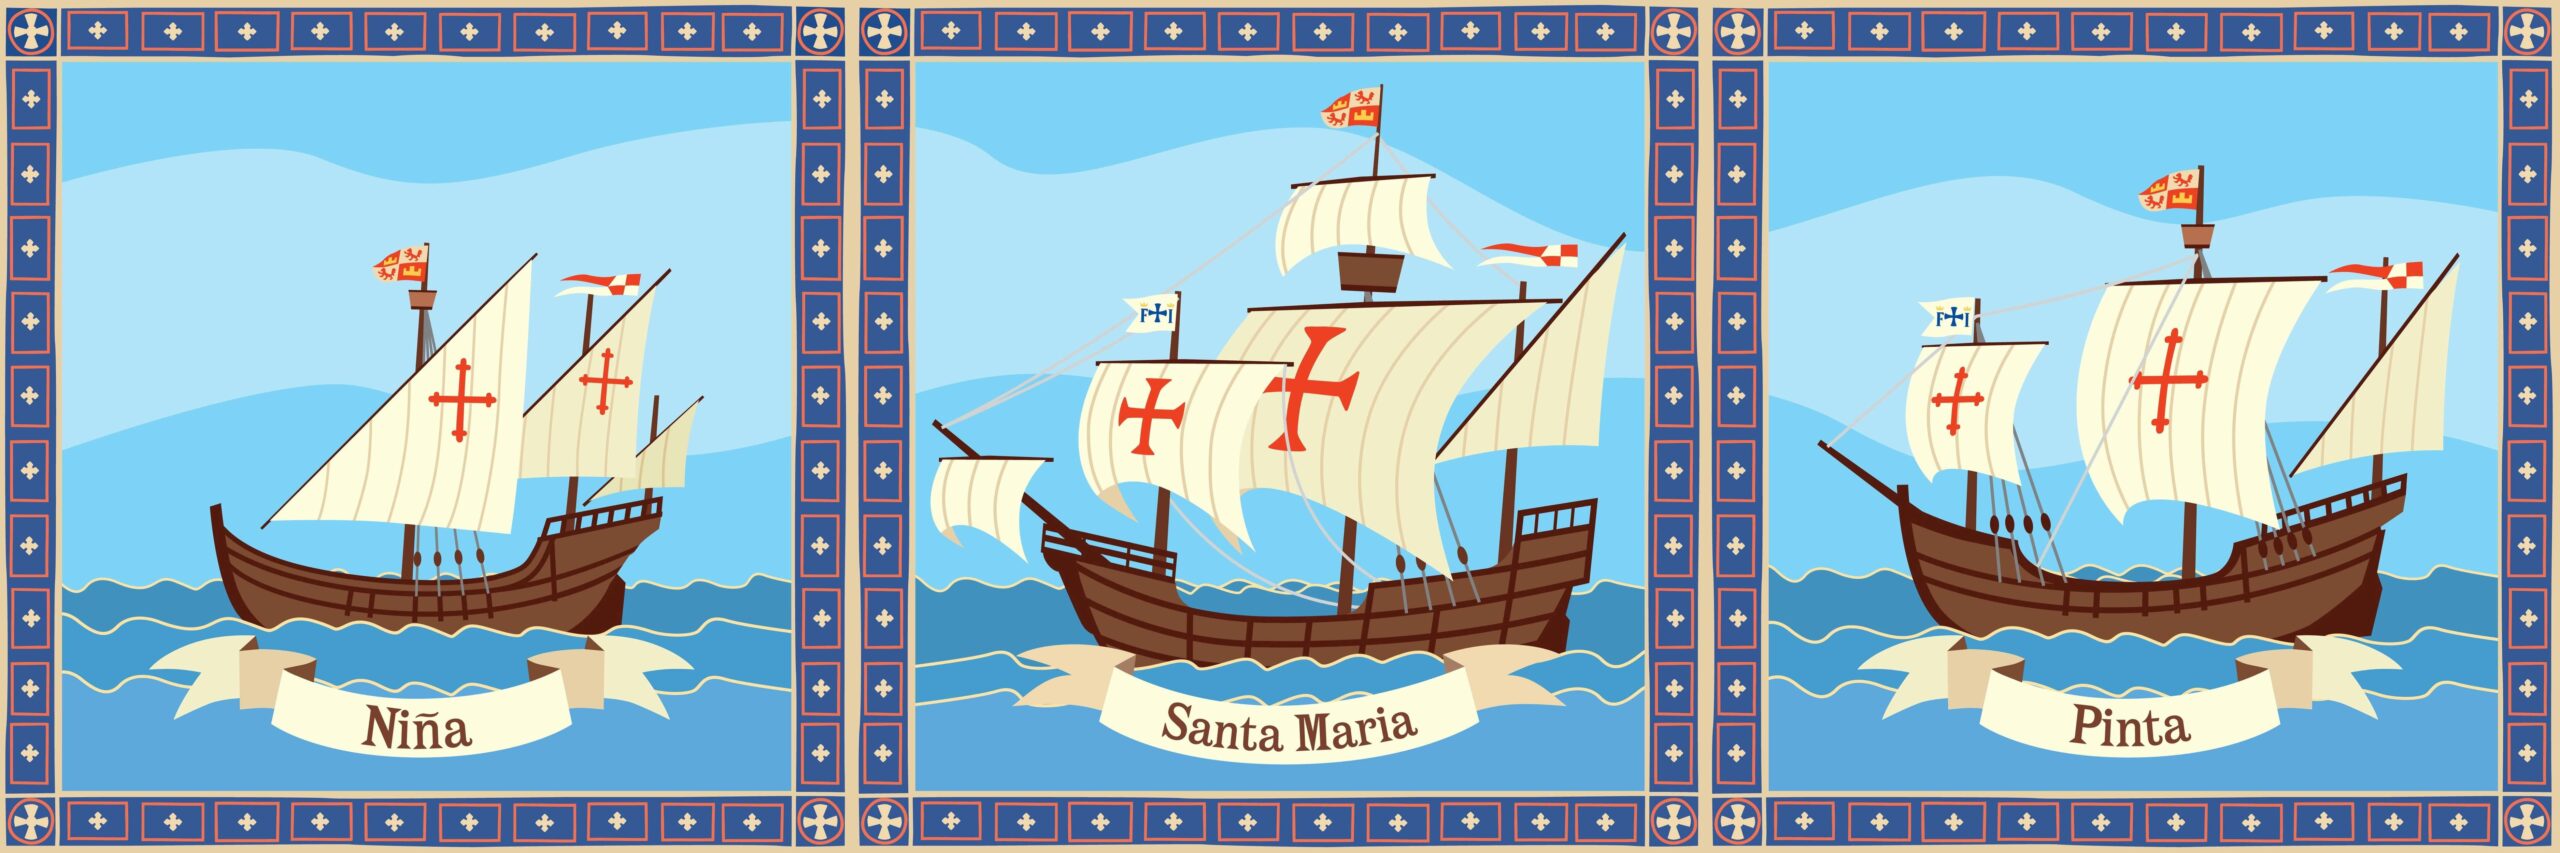 Niña, Santa Maria, Pinta - Kolumbove lode